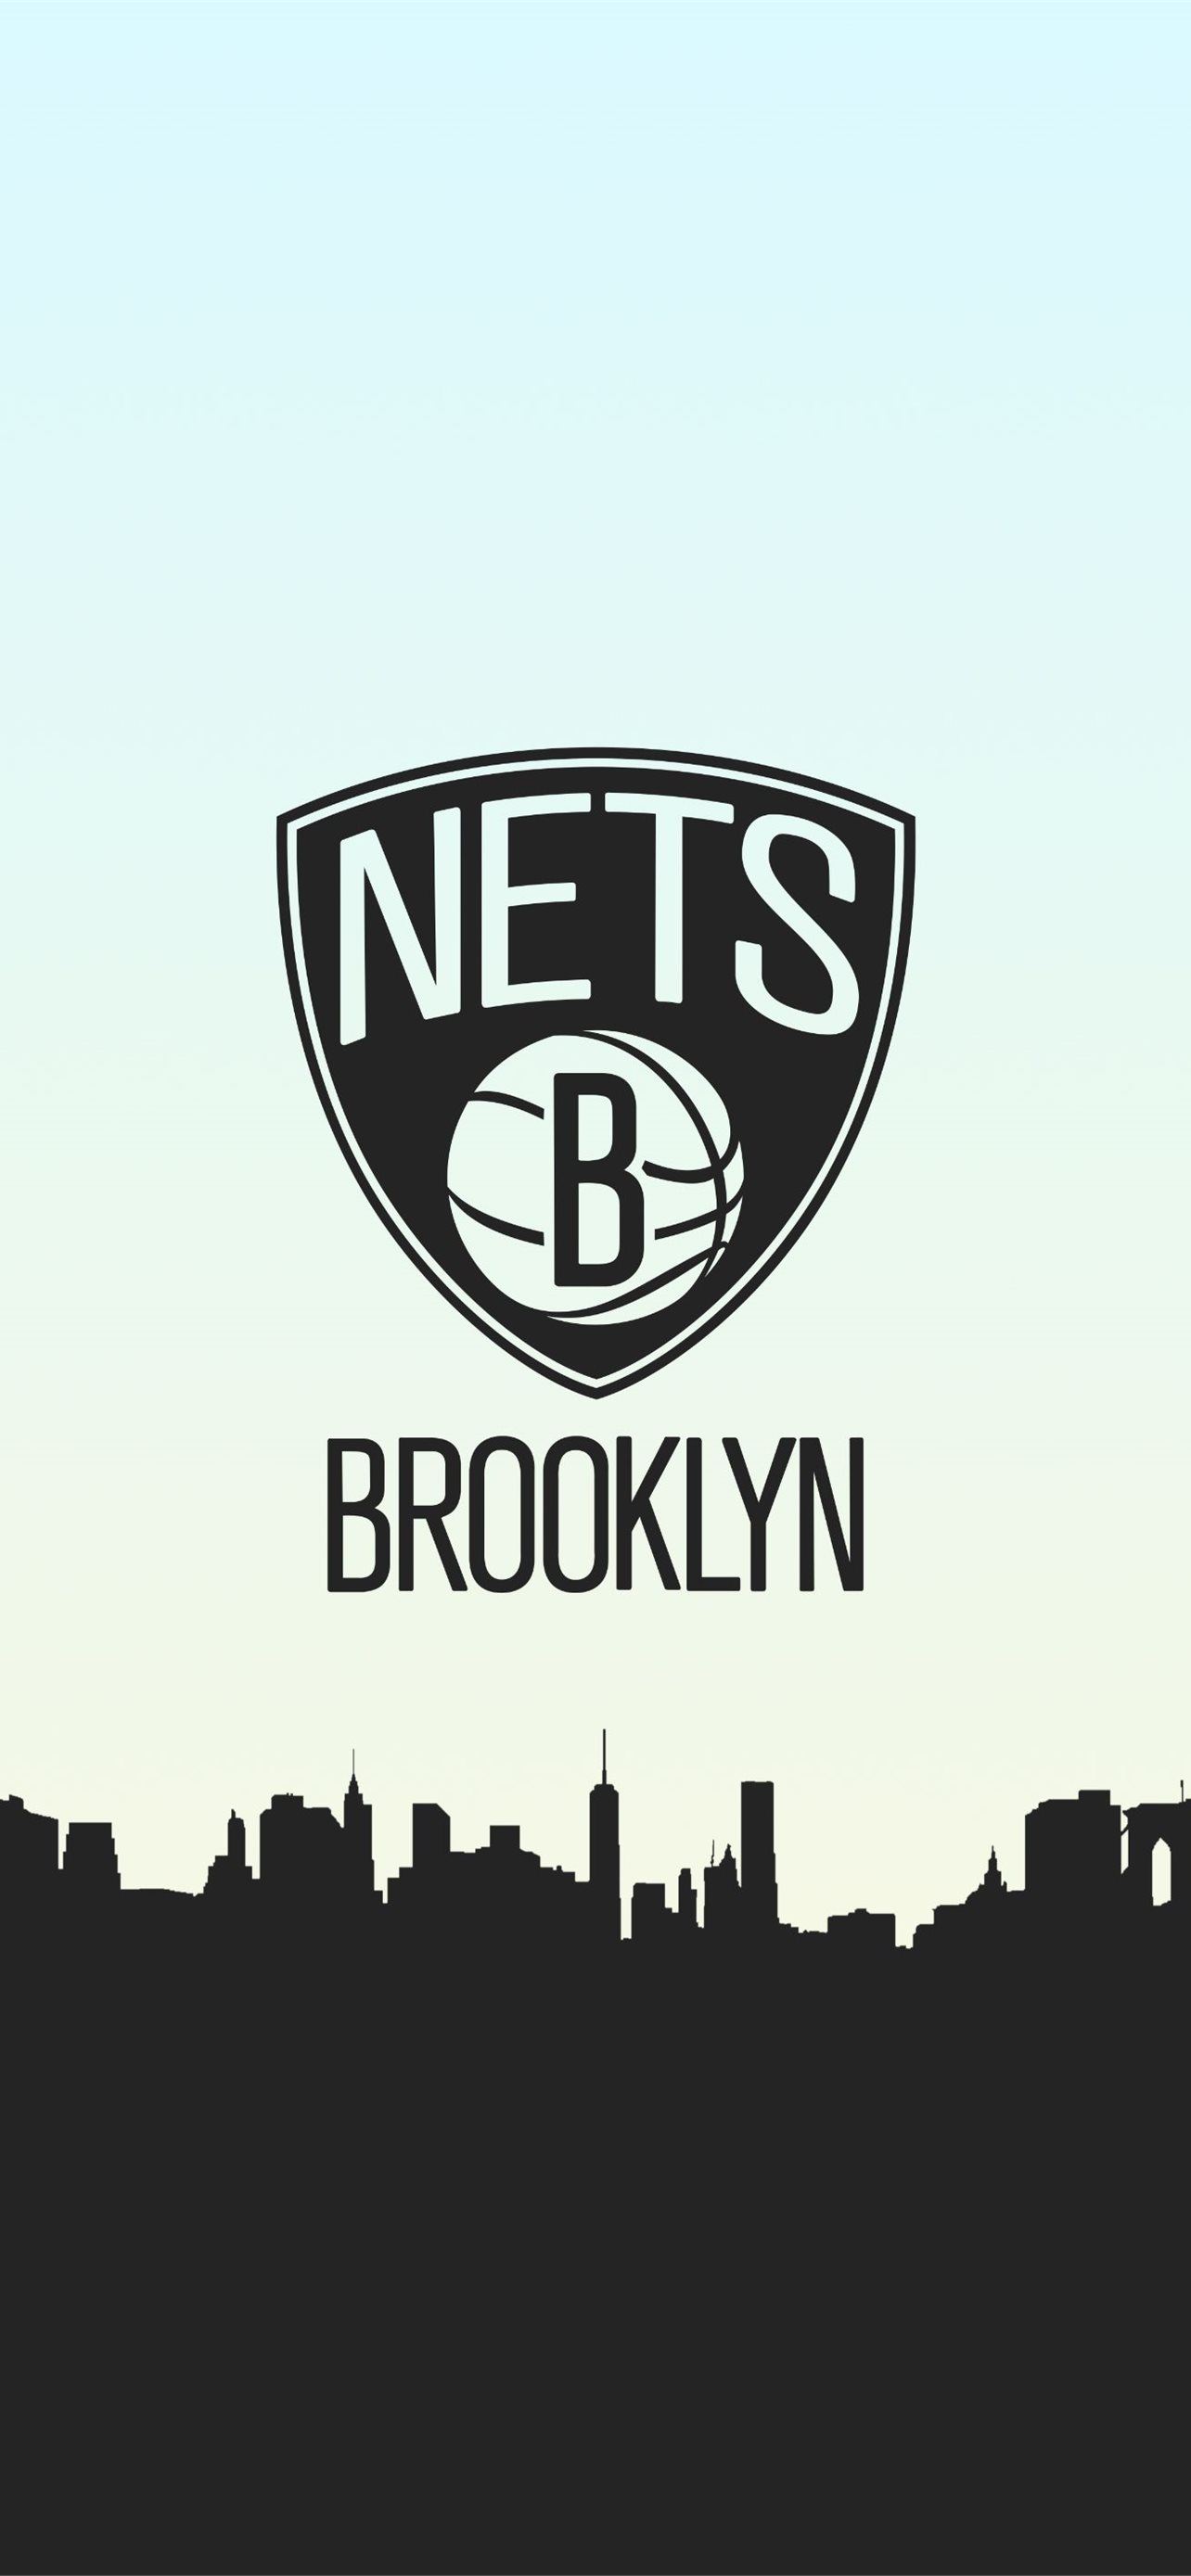 Brooklyn Nets Twitterren ultshanator heres another option wallpaper  size httpstcoTXRBTs4oq8  Twitter